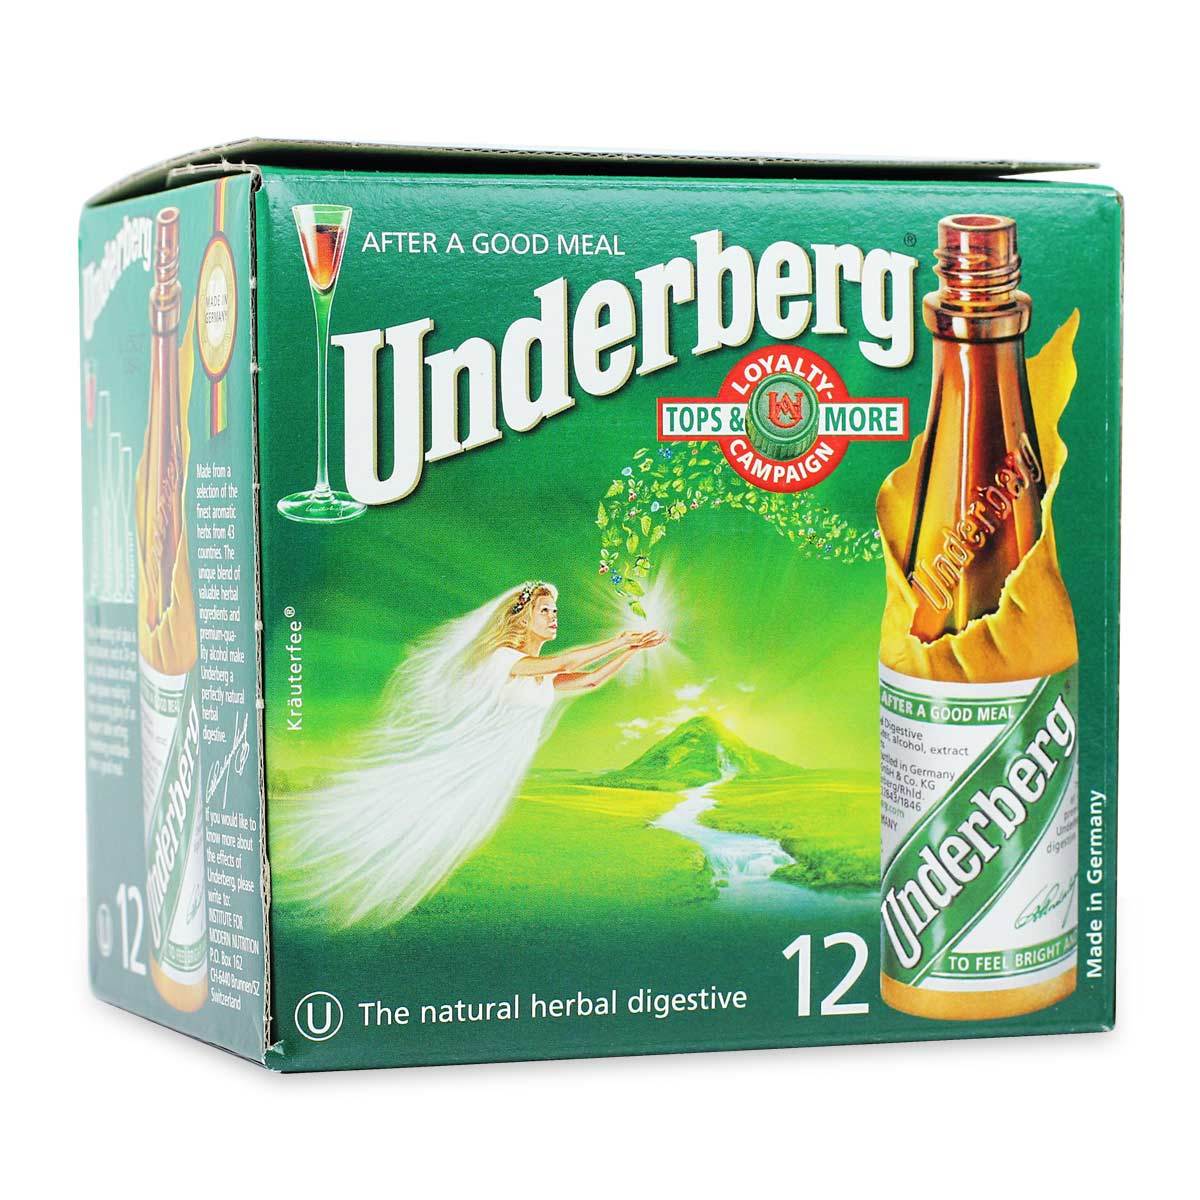 Primary Image of Underberg Cardboard Box of 12 bottles